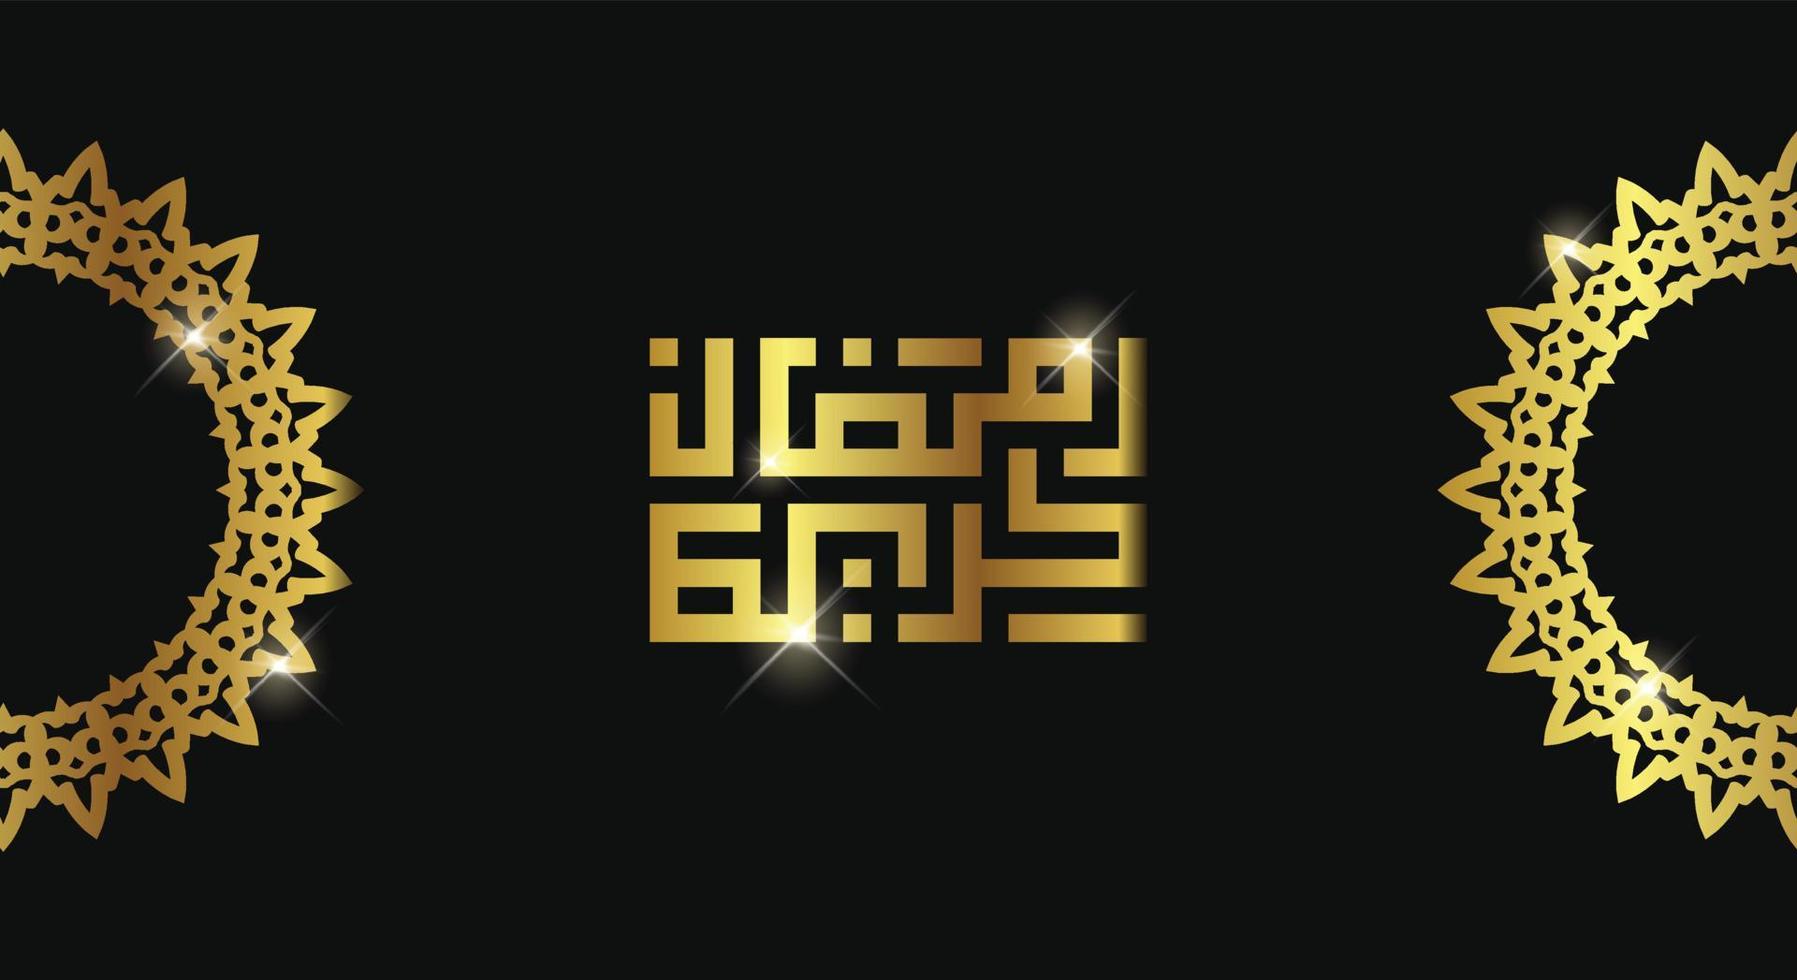 ramadan kareem arabische kalligraphie hintergrundvektorillustration vektor